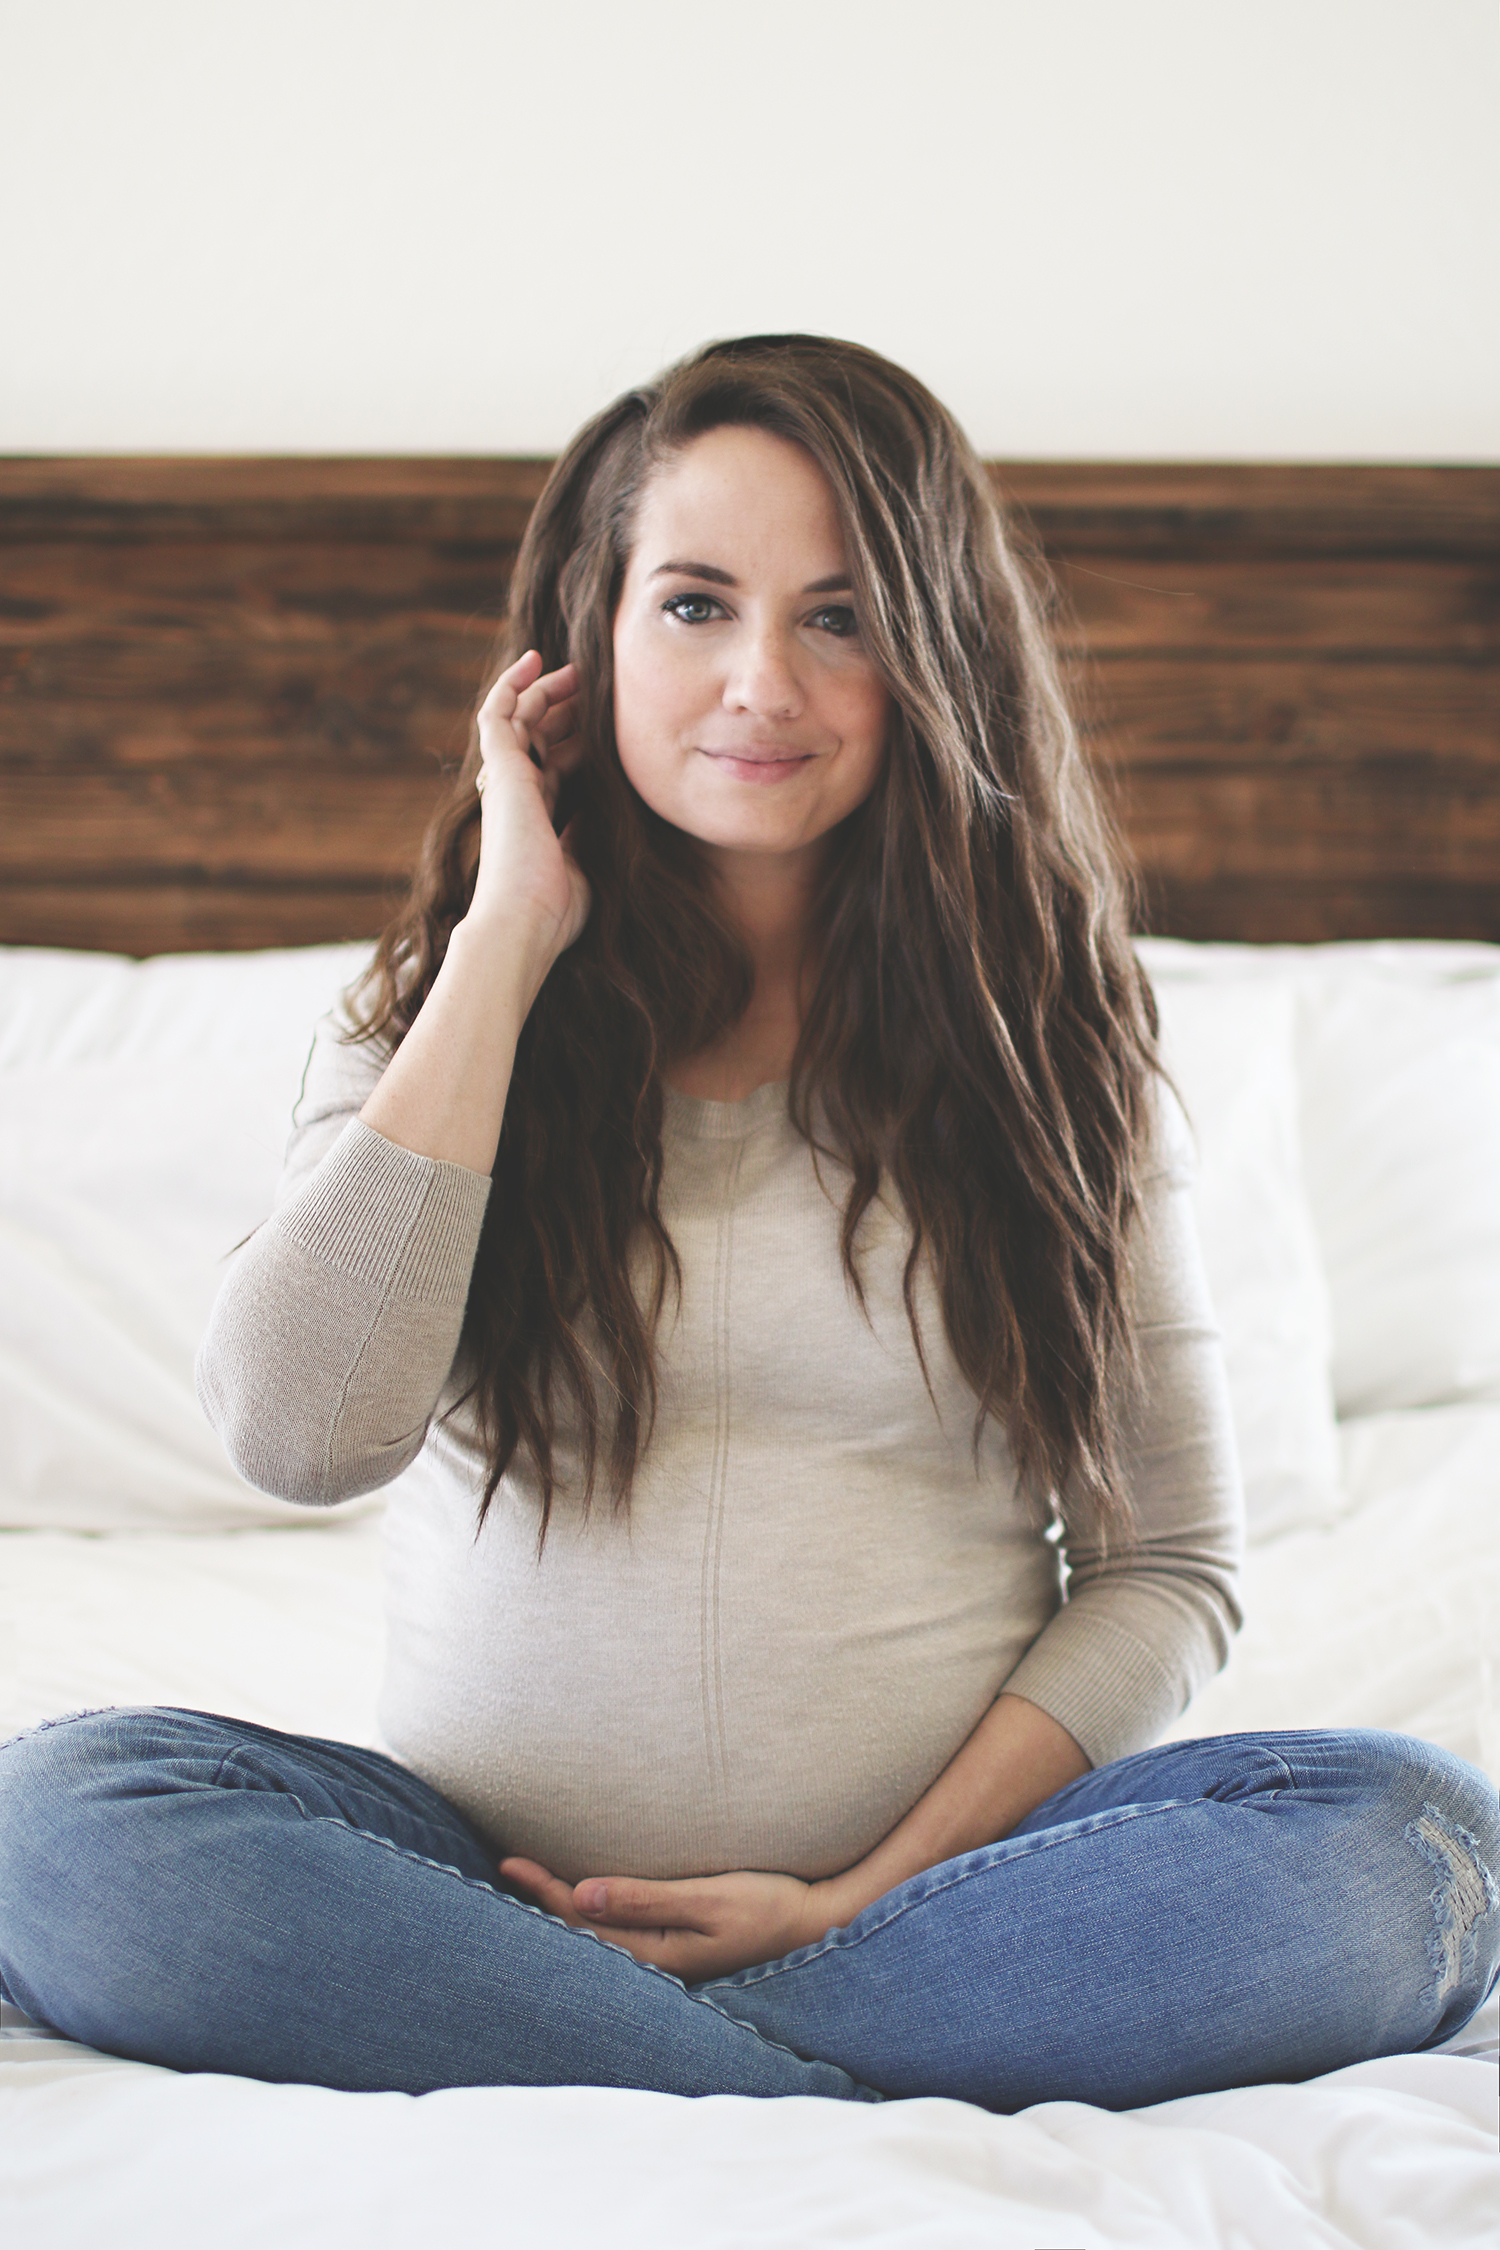 A bump update at 36 weeks and dealing with gestational diabetes | HausOfLayne.com #Pregnancy #BabyBump #GestationalDiabetes